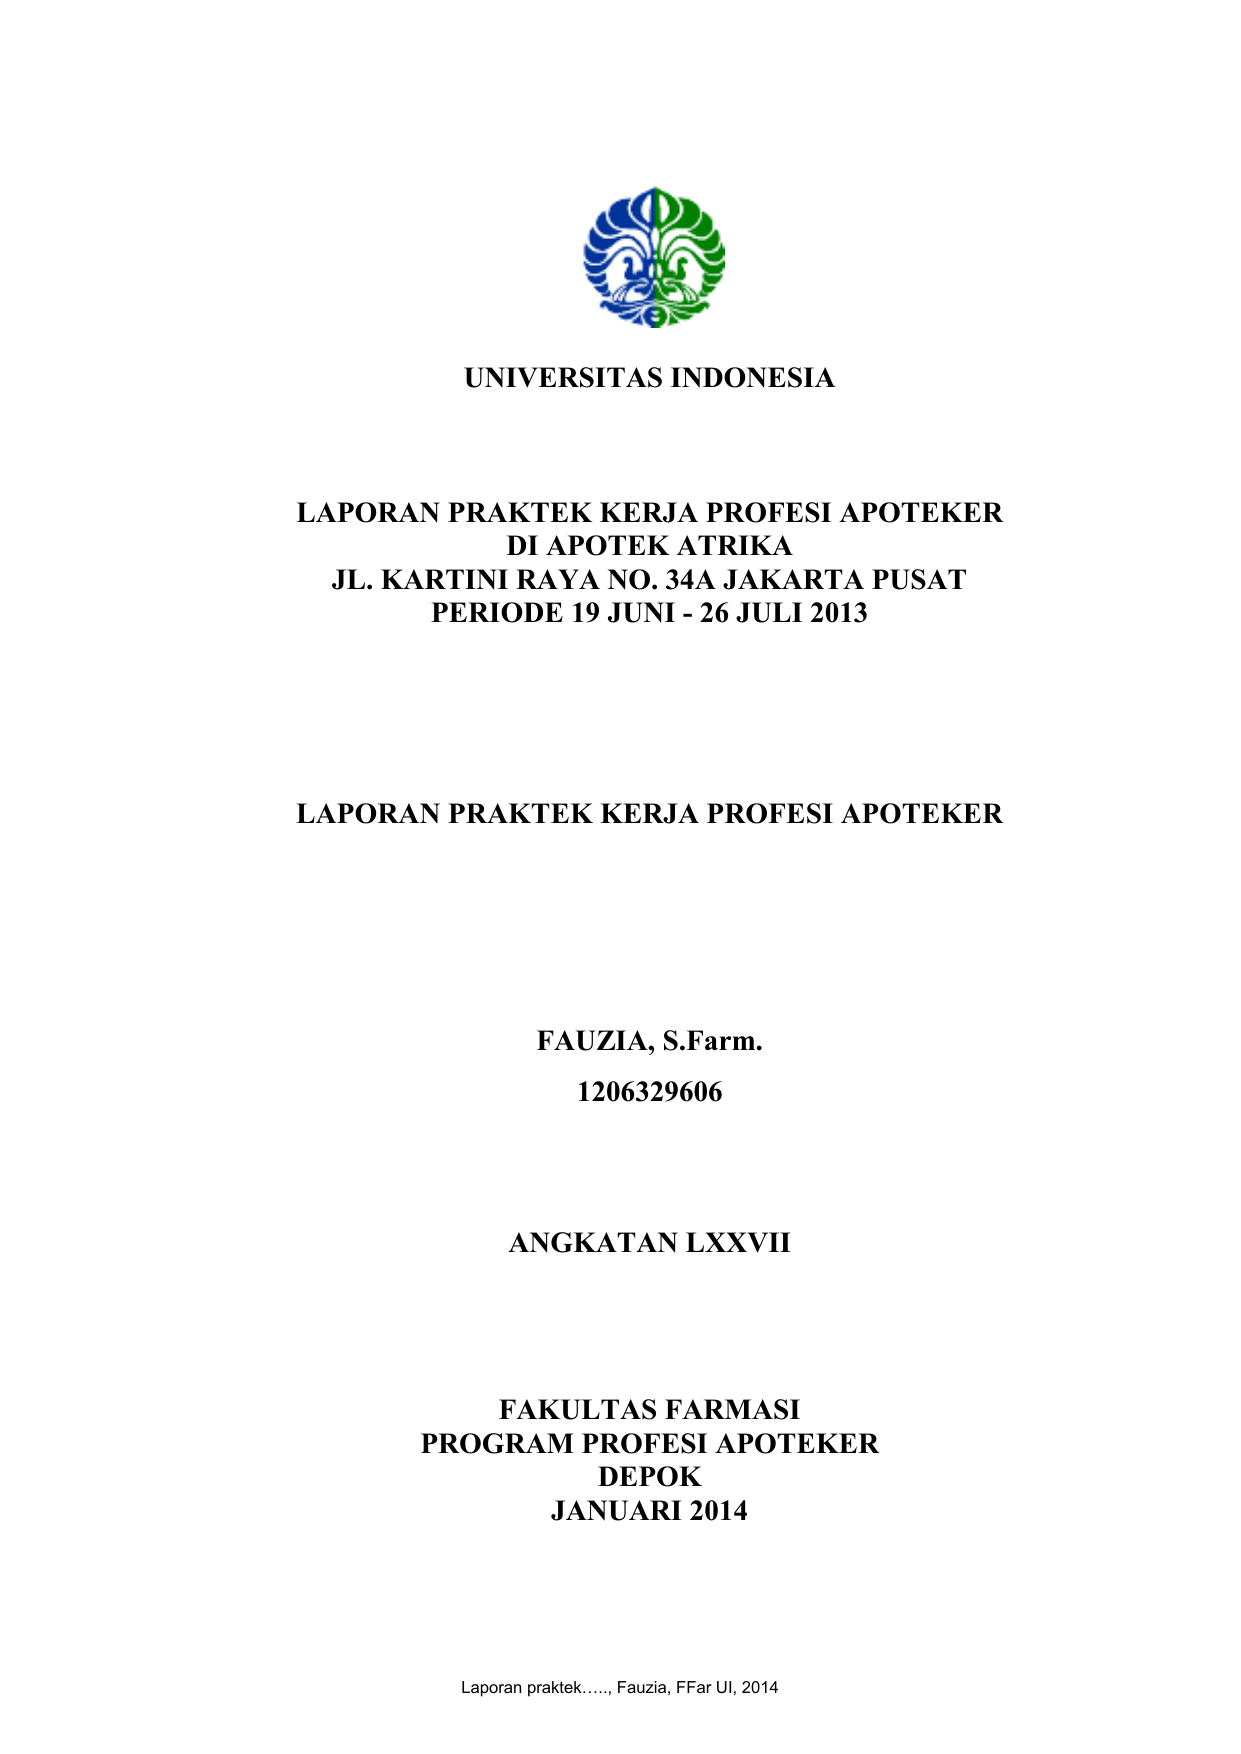 UNIVERSITAS INDONESIA LAPORAN PRAKTEK KERJA PROFESI APOTEKER DI APOTEK ATRIKA JL KARTINI RAYA NO 34A JAKARTA PUSAT PERIODE 19 JUNI 26 JULI 2013 LAPORAN